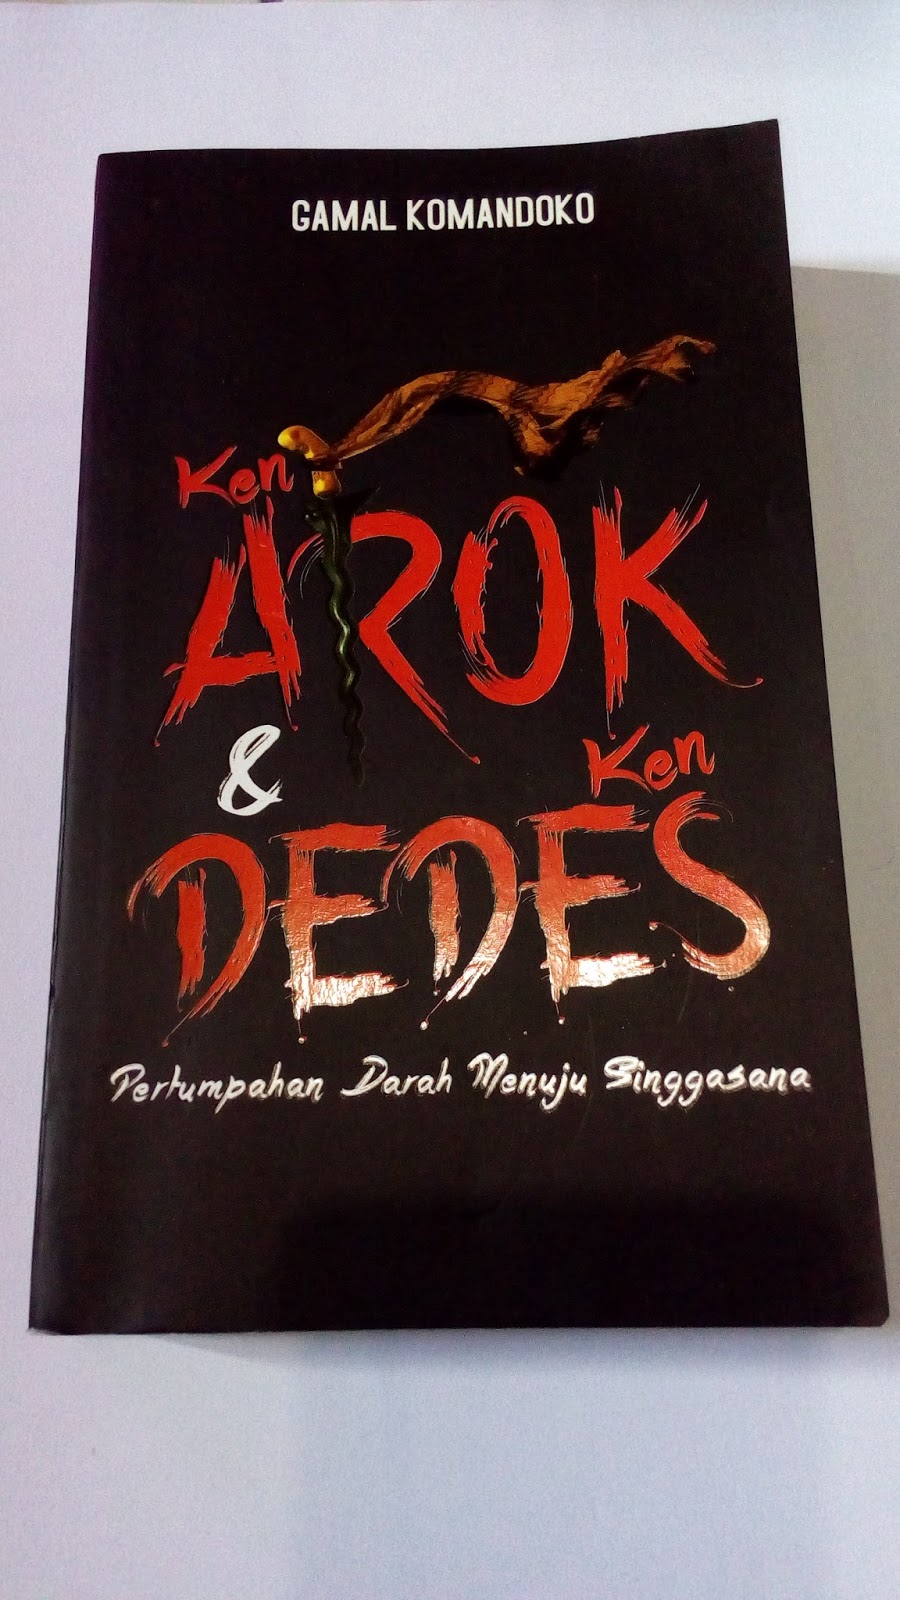 [Resensi Novel] Ken Arok dan Ken Dedes - Gamal Komandoko 